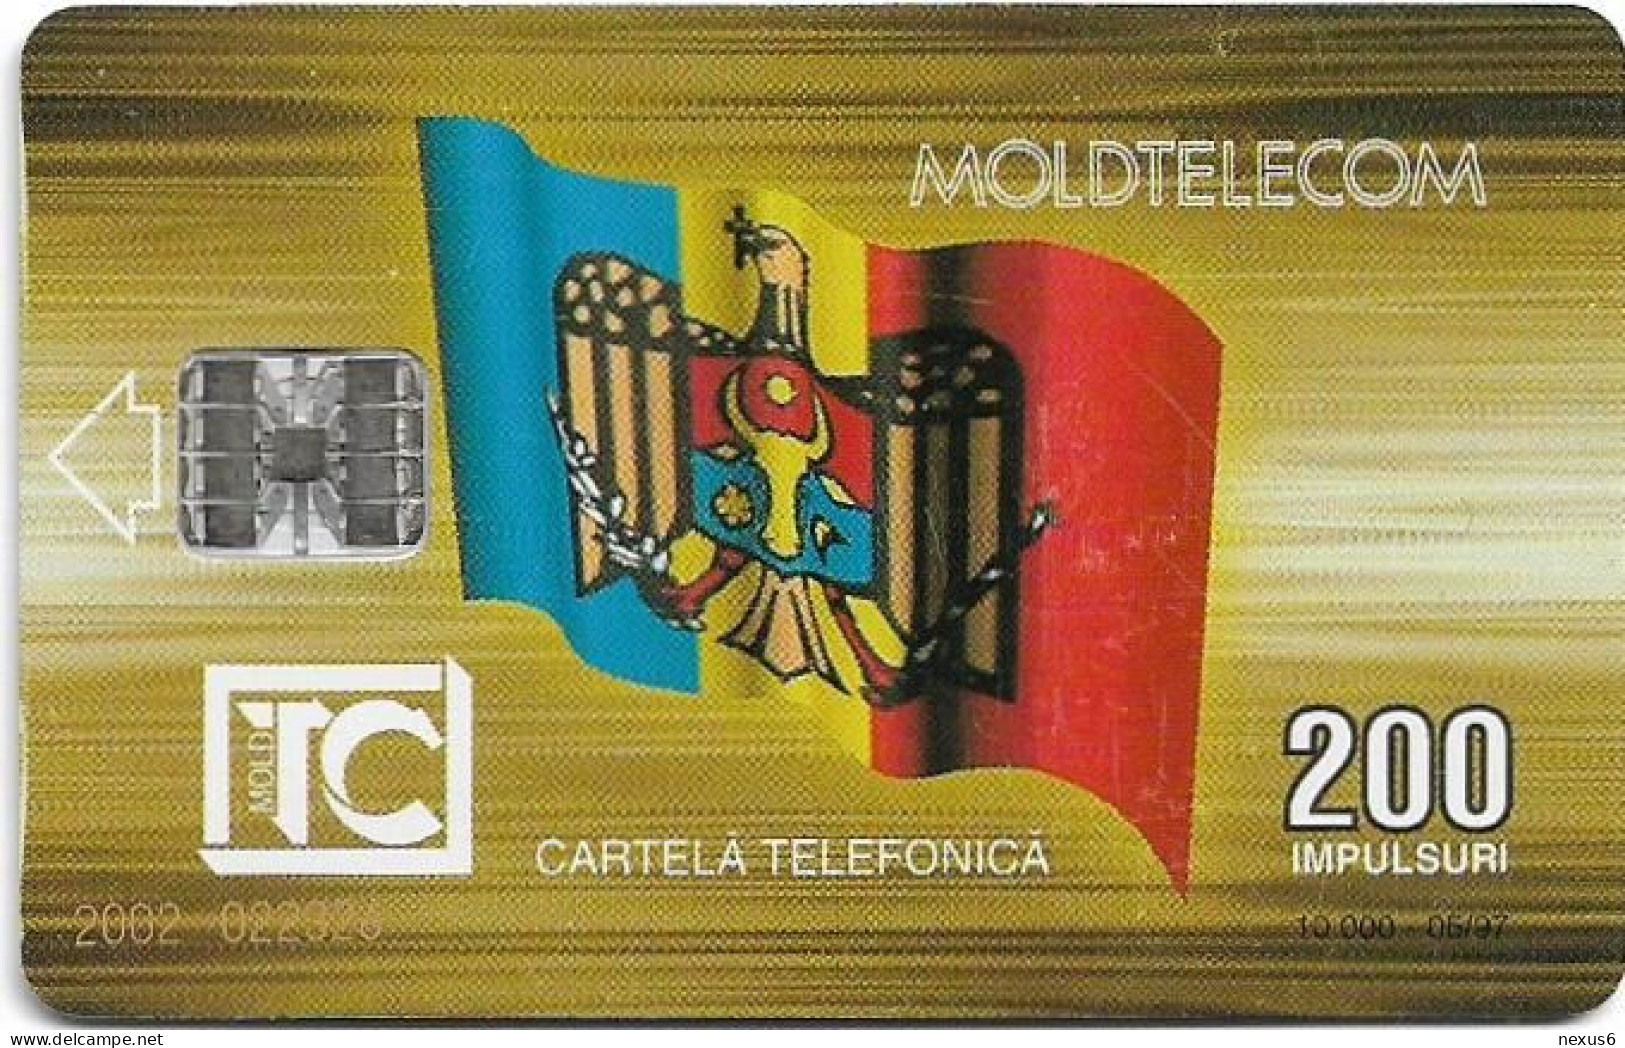 Moldova - Moldtelecom - Flag 3rd Issue, SC7, 05.1997, 200U, 10.000ex, Used - Moldova